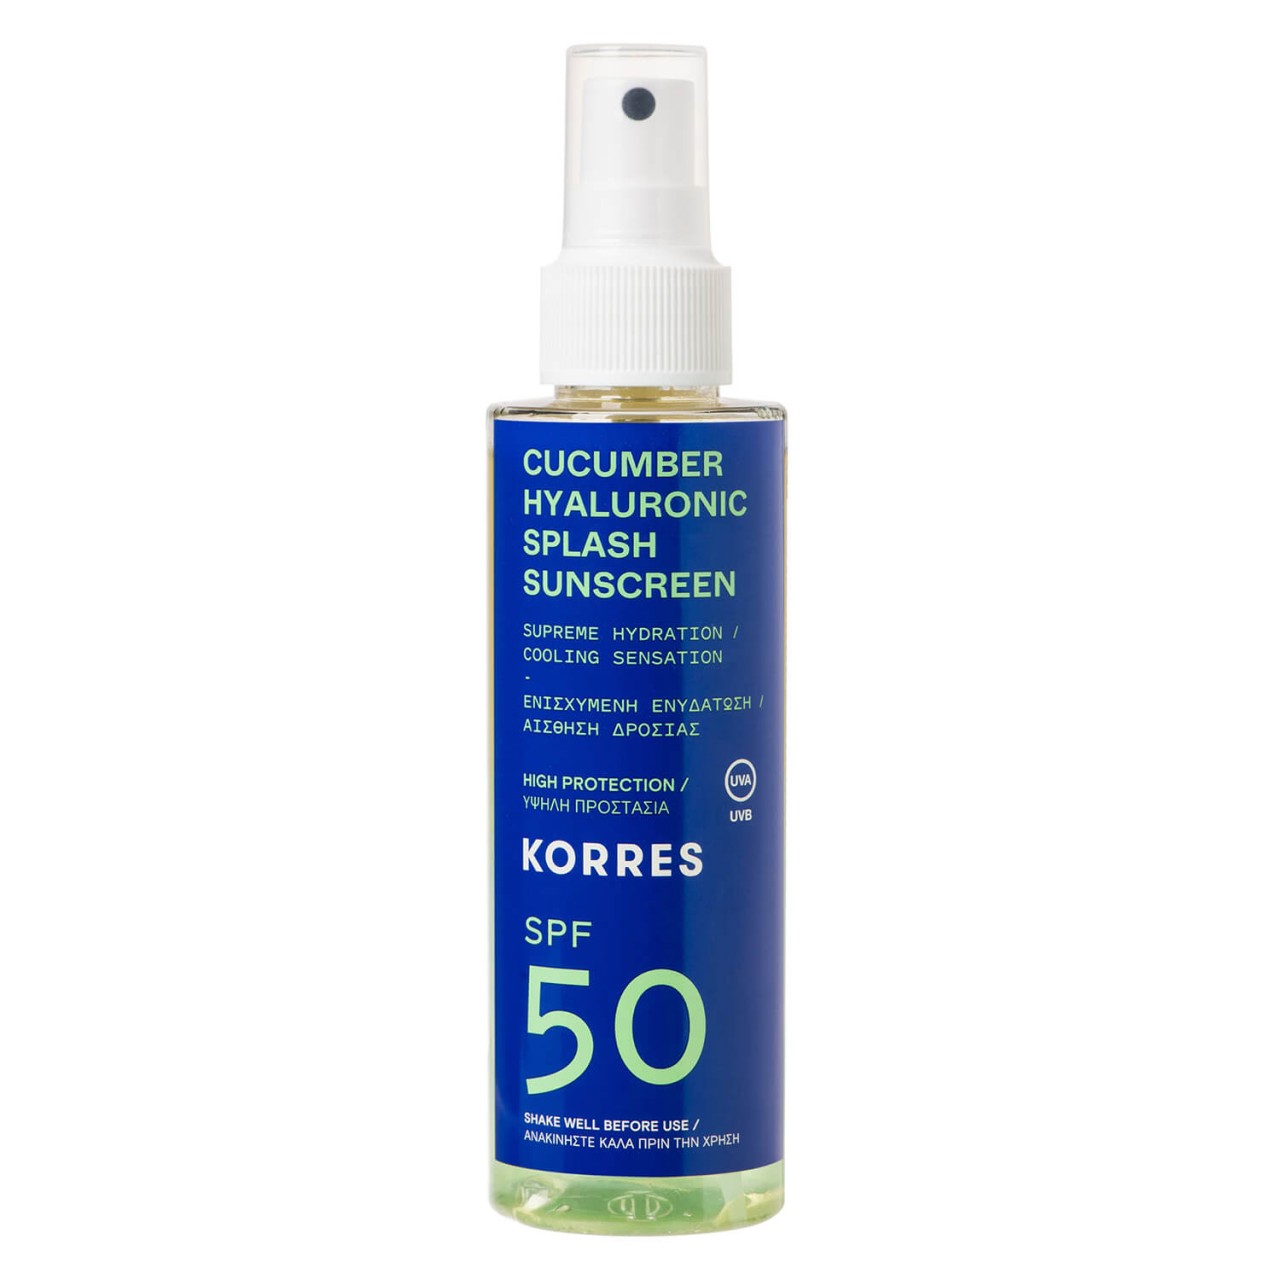 Korres Care - Cucumber Hyaluronic Splash Sunscreen SPF50 von Korres